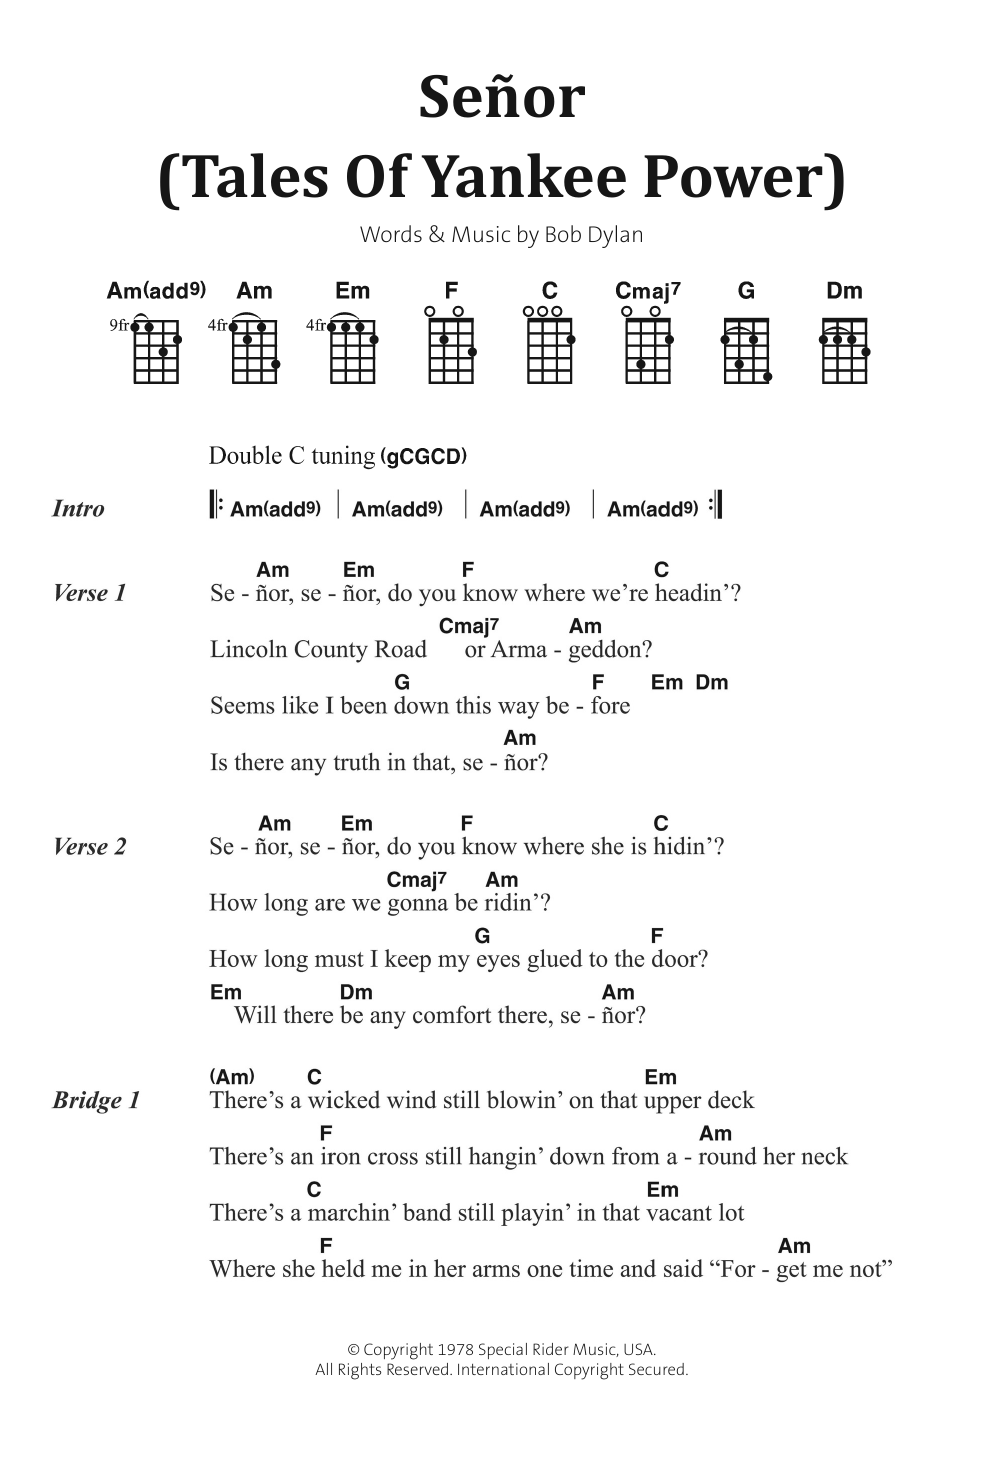 Bob Dylan Senor (Tales Of Yankee Power) Sheet Music Notes & Chords for Banjo Lyrics & Chords - Download or Print PDF